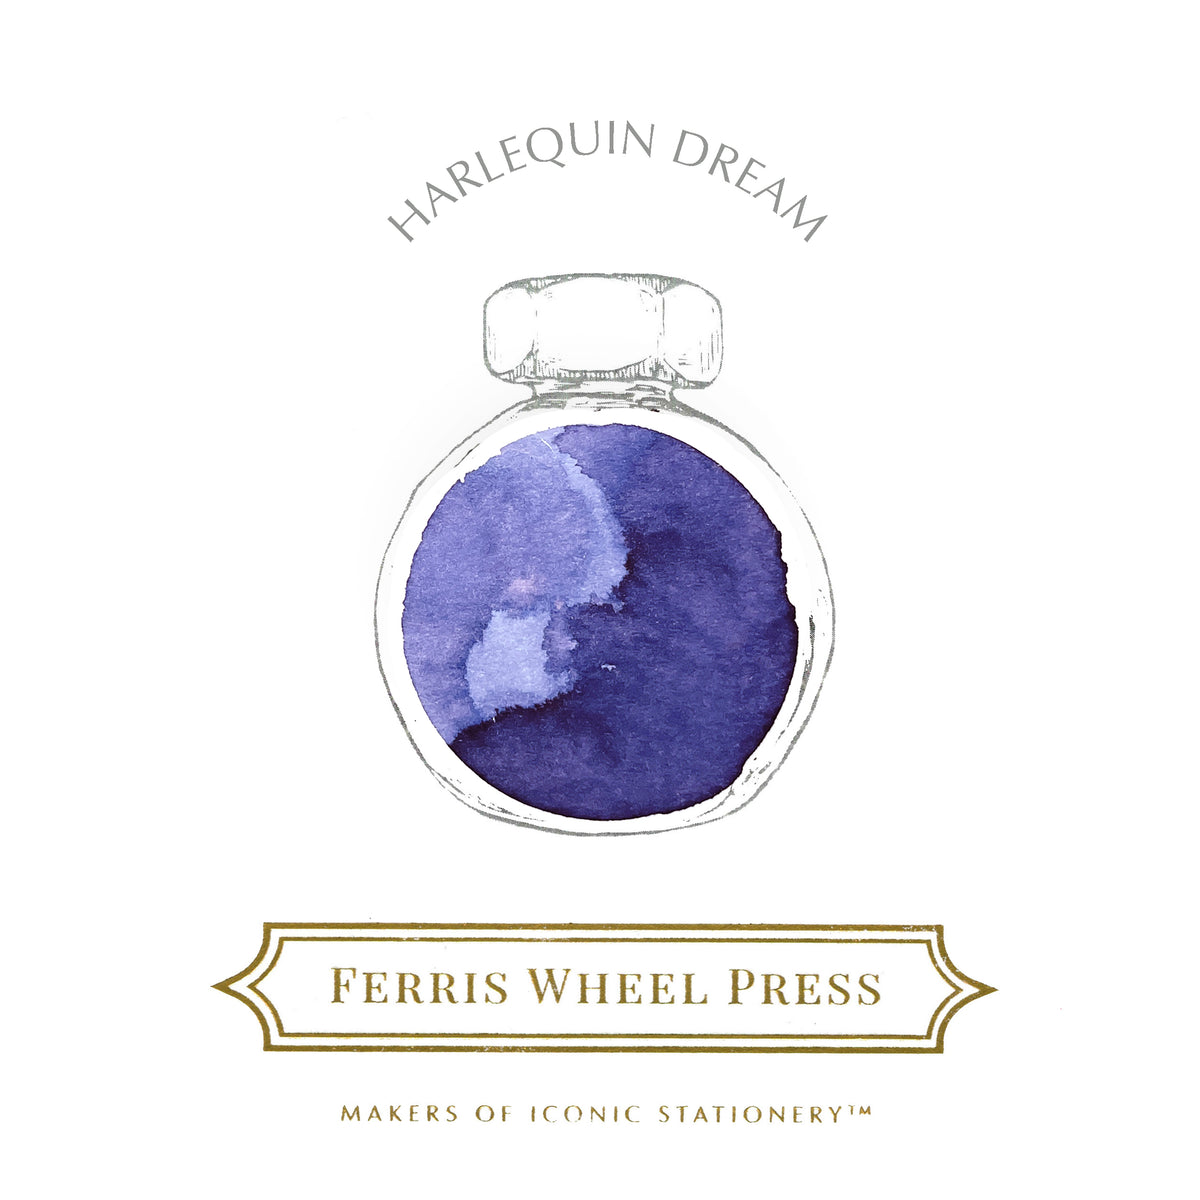 Ferris Wheel Press - The Midnight Masquerade Collection - Harlequin Dream